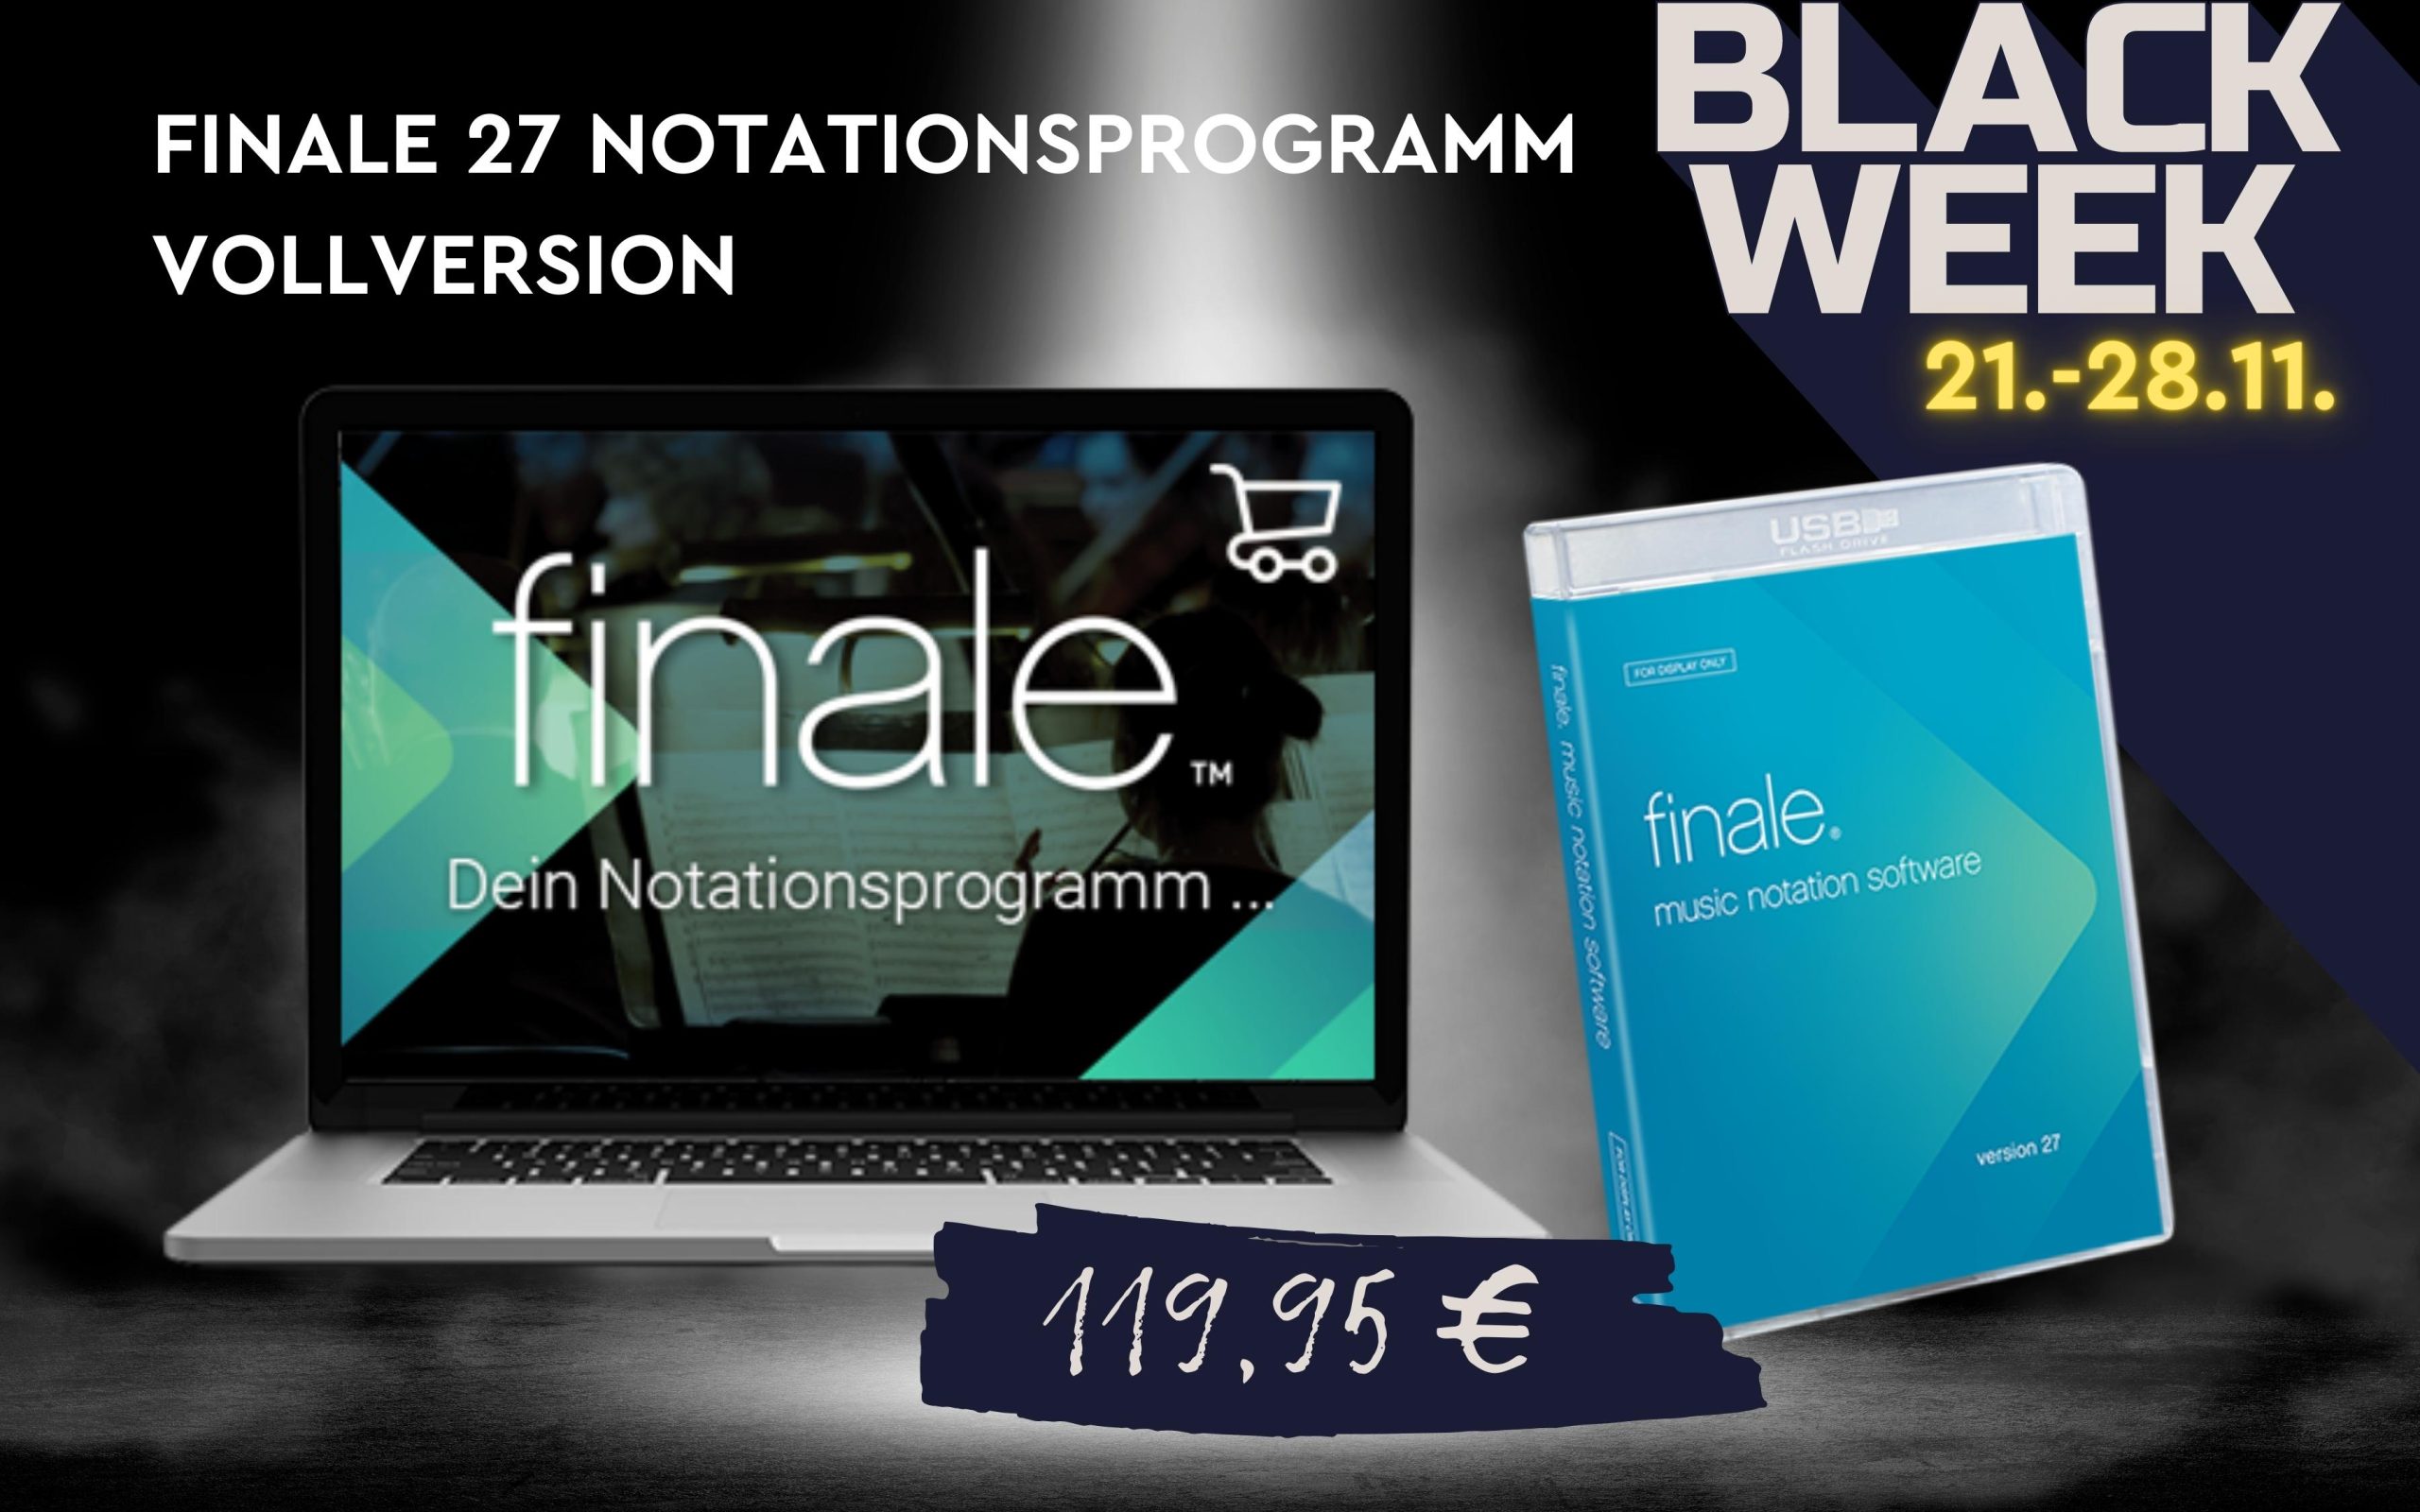 Black-Week-Finale-27